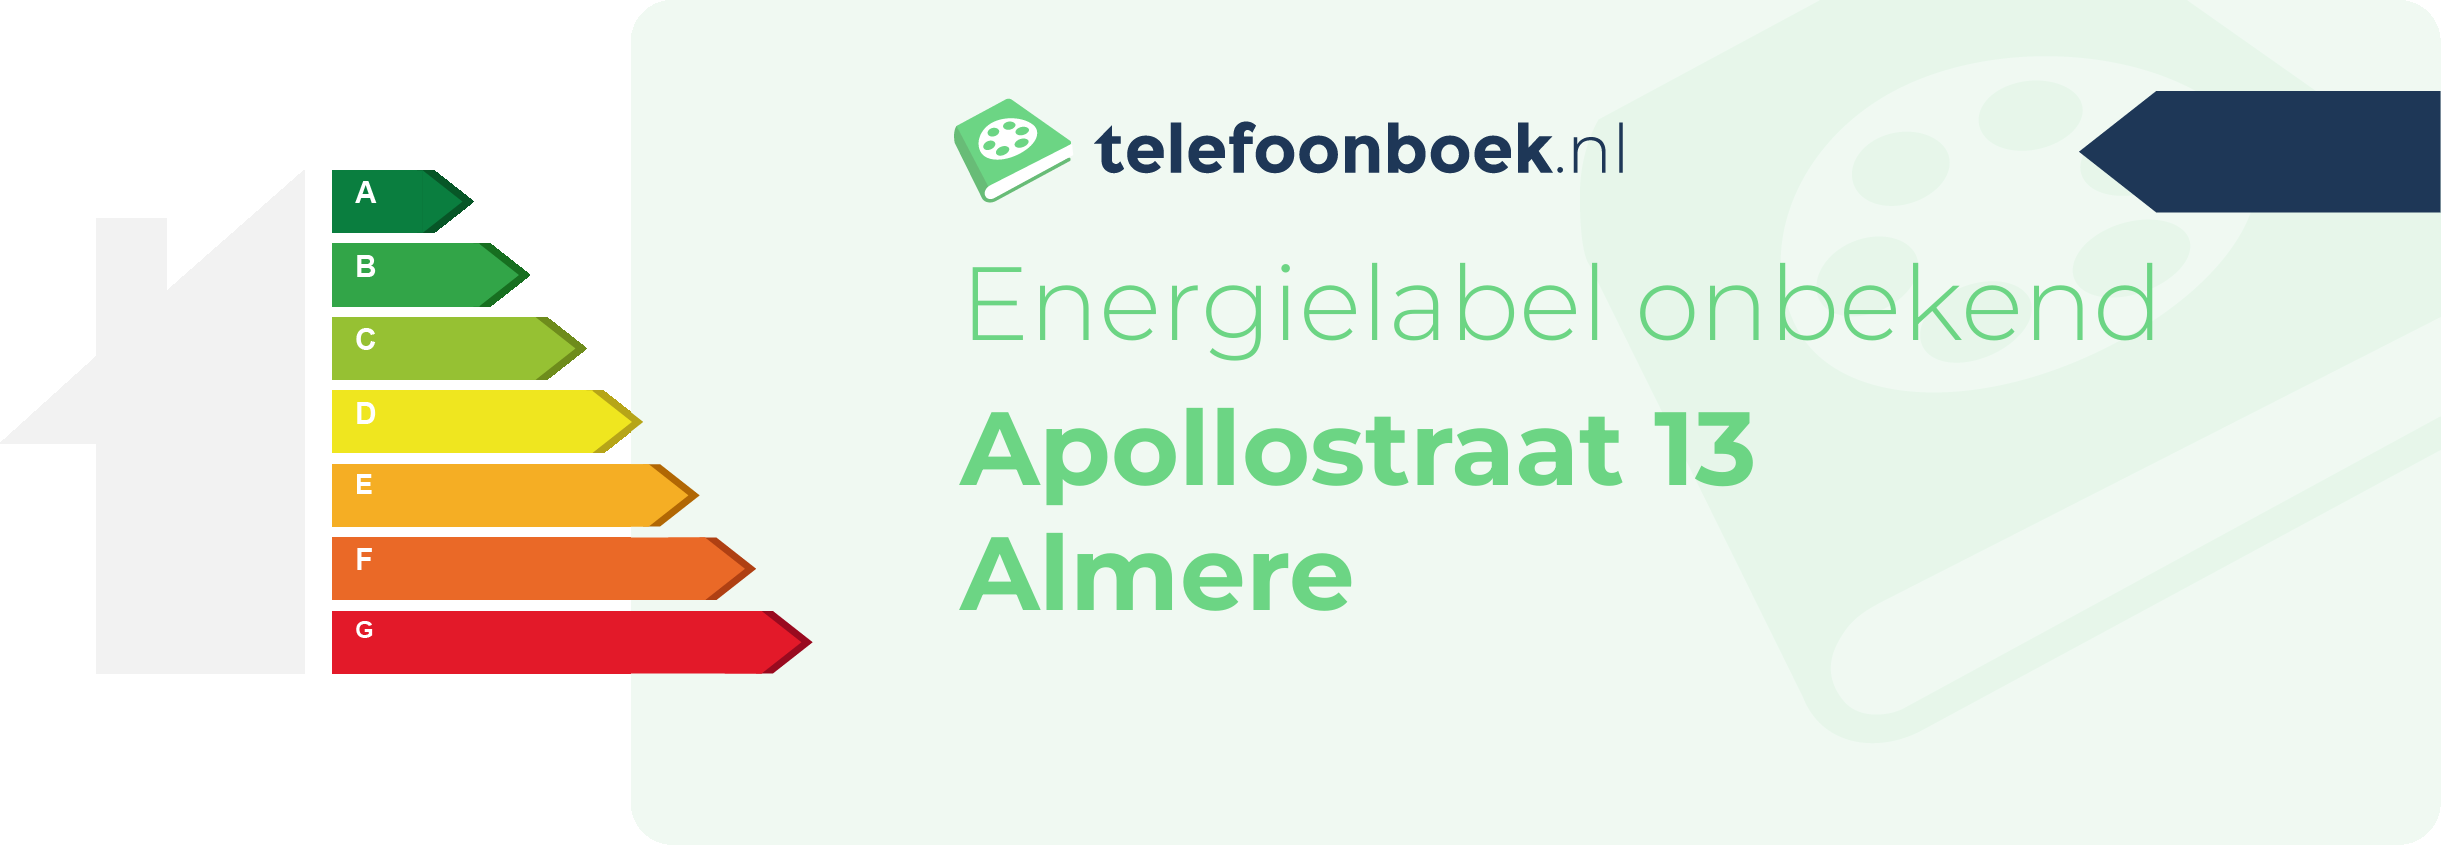 Energielabel Apollostraat 13 Almere